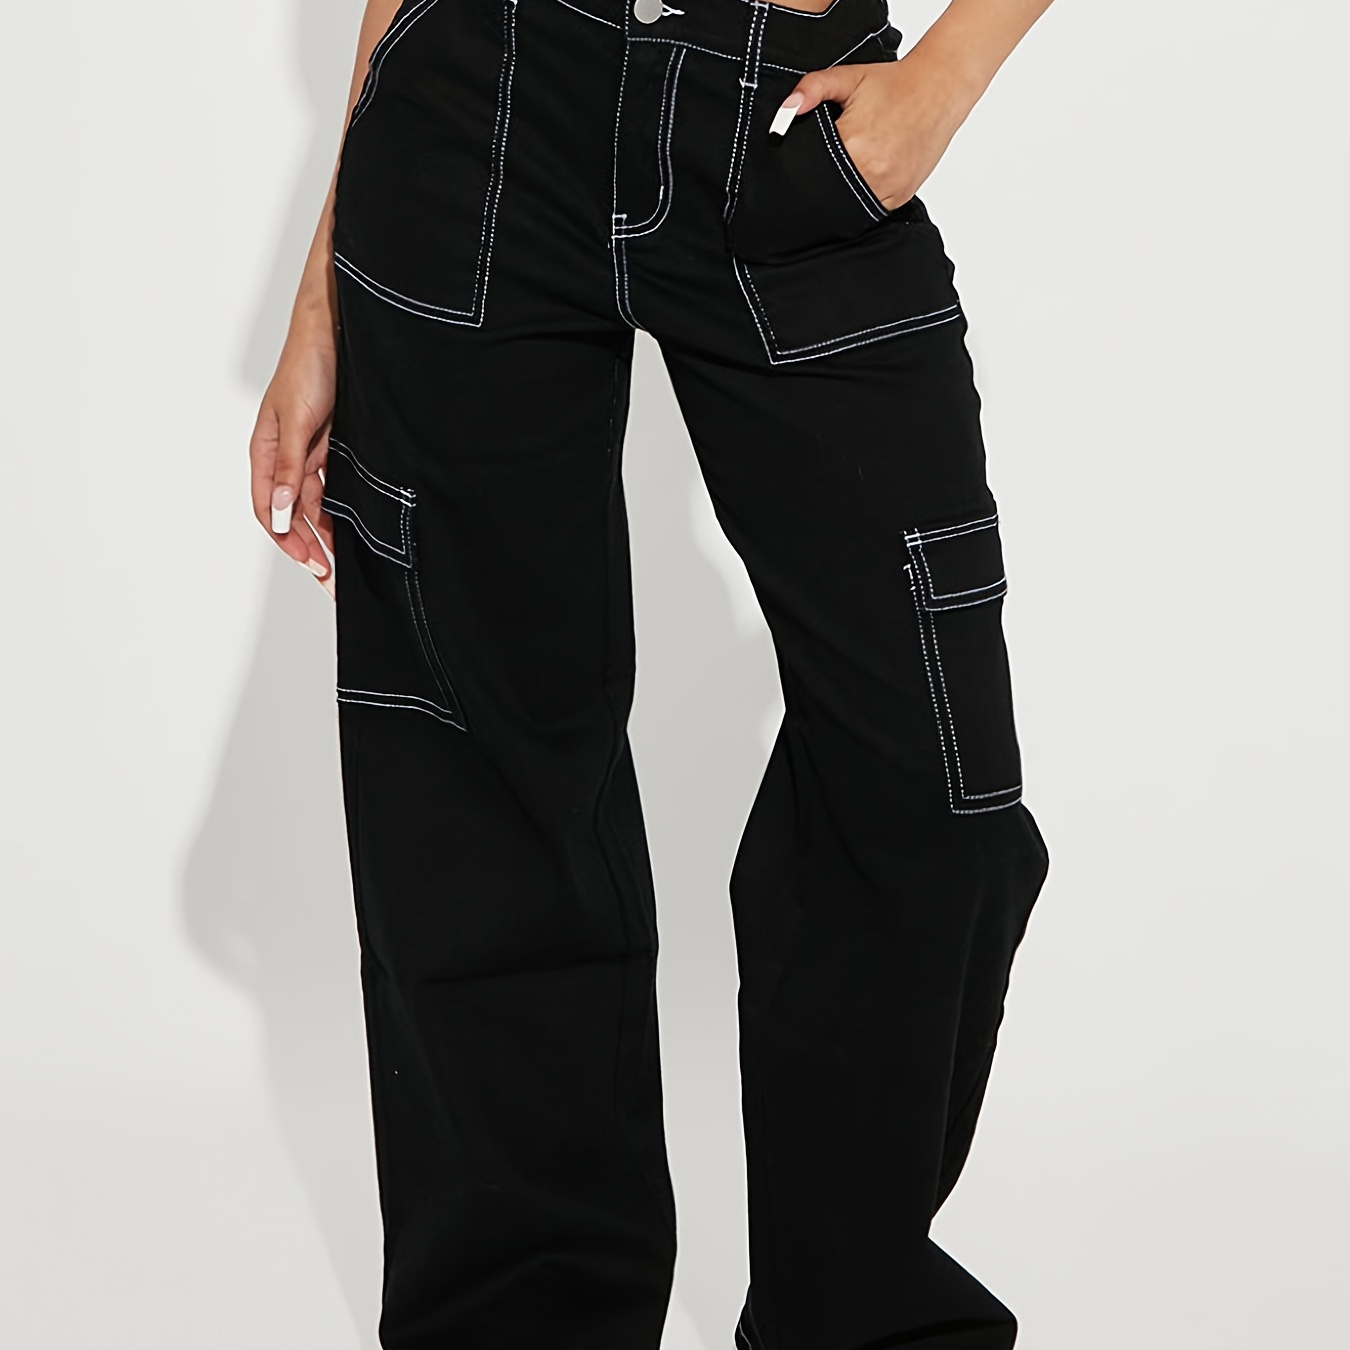 Jack David Women's Plus Size Blue/Black Curvy Stretch Flap Pocket  Skinny/Bootcut/Cargo Denim Jeans Pants at  Women's Jeans store